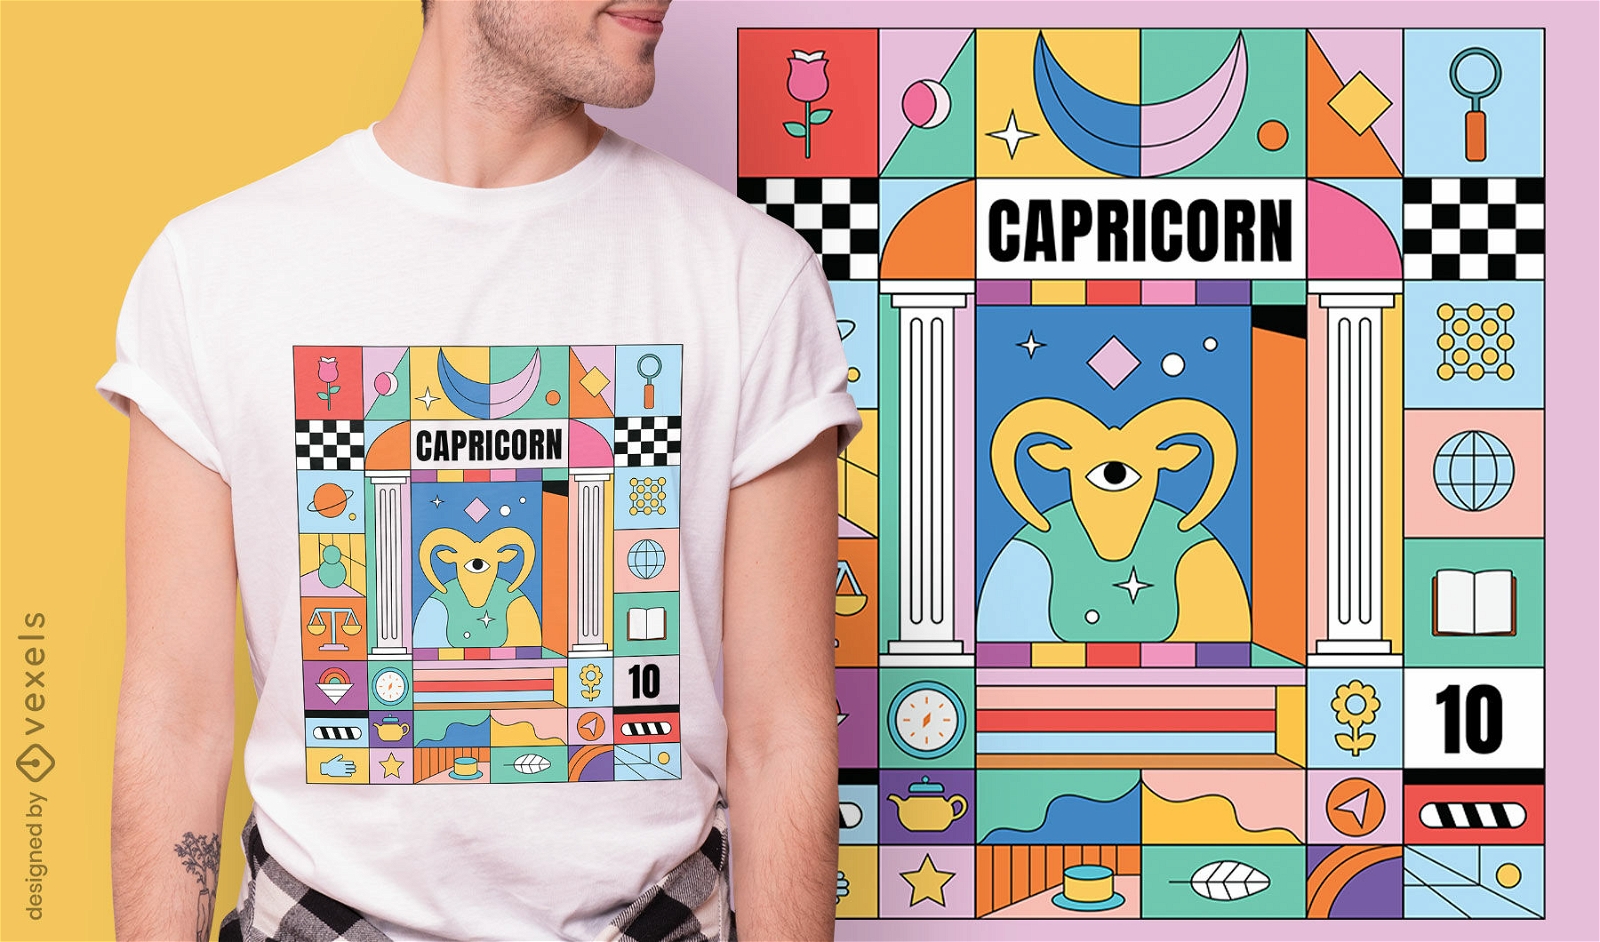 Capricorn colorful zodiac sign t-shirt design